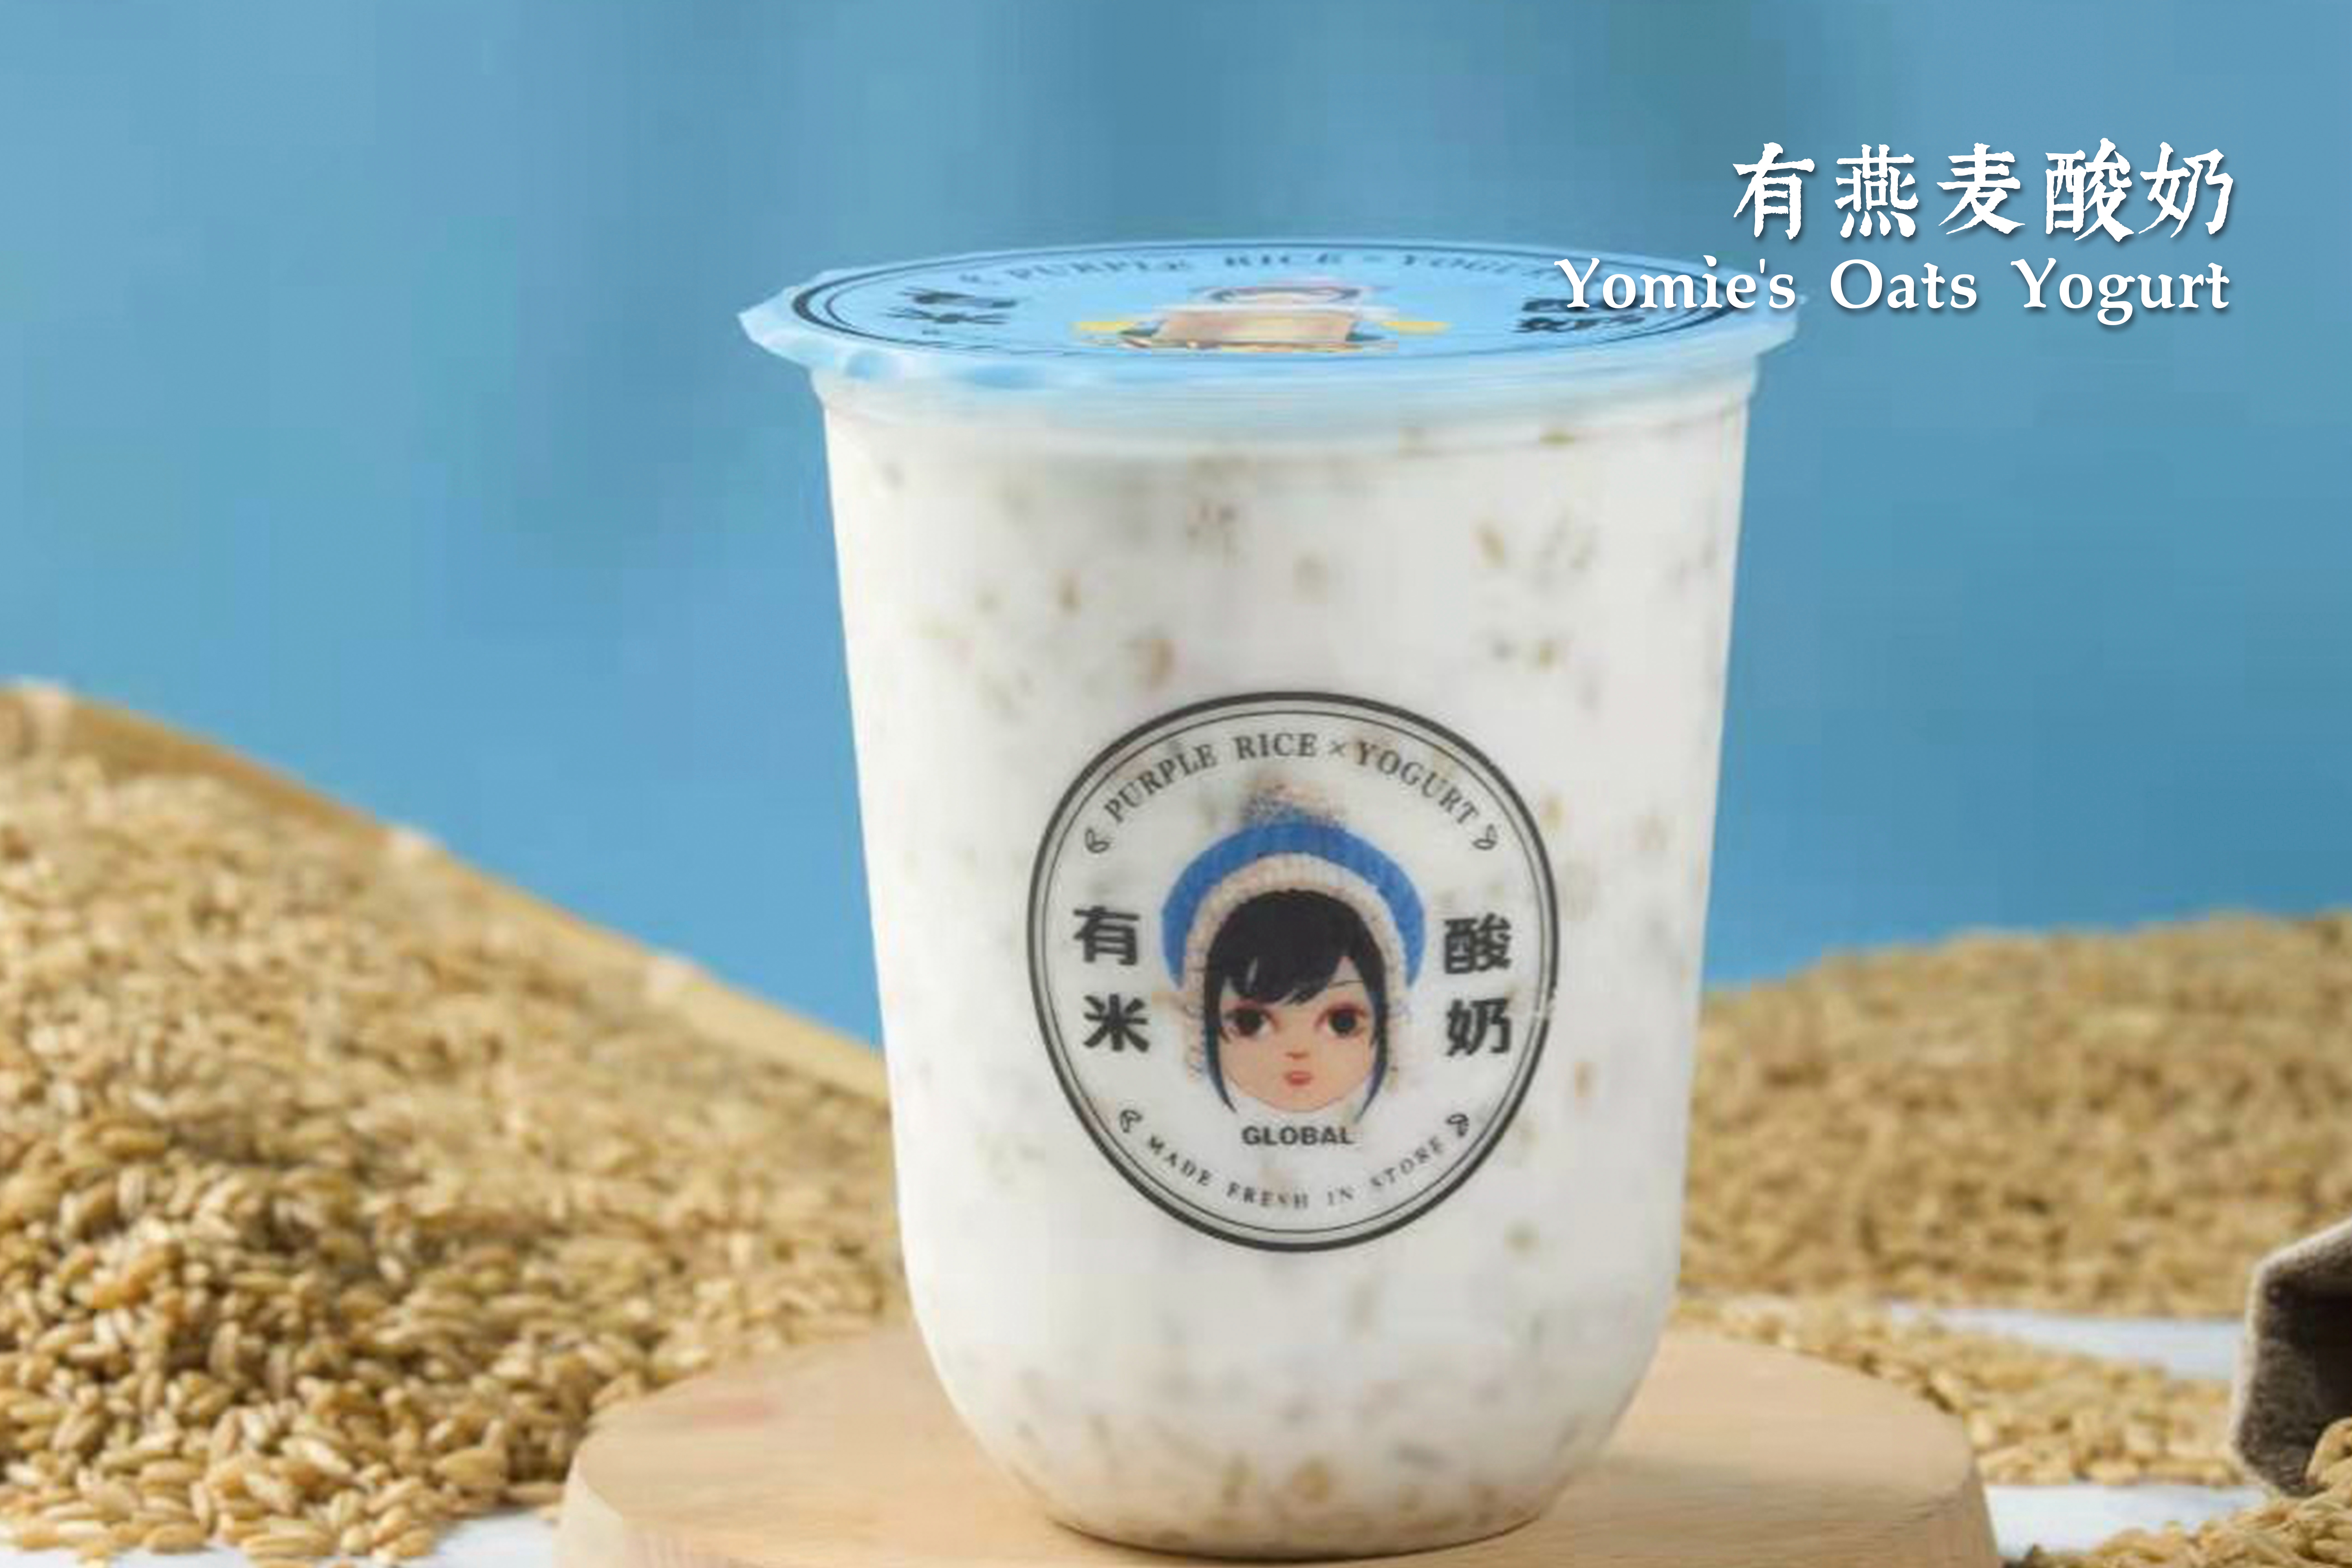 Yomie's Oats Yogurt